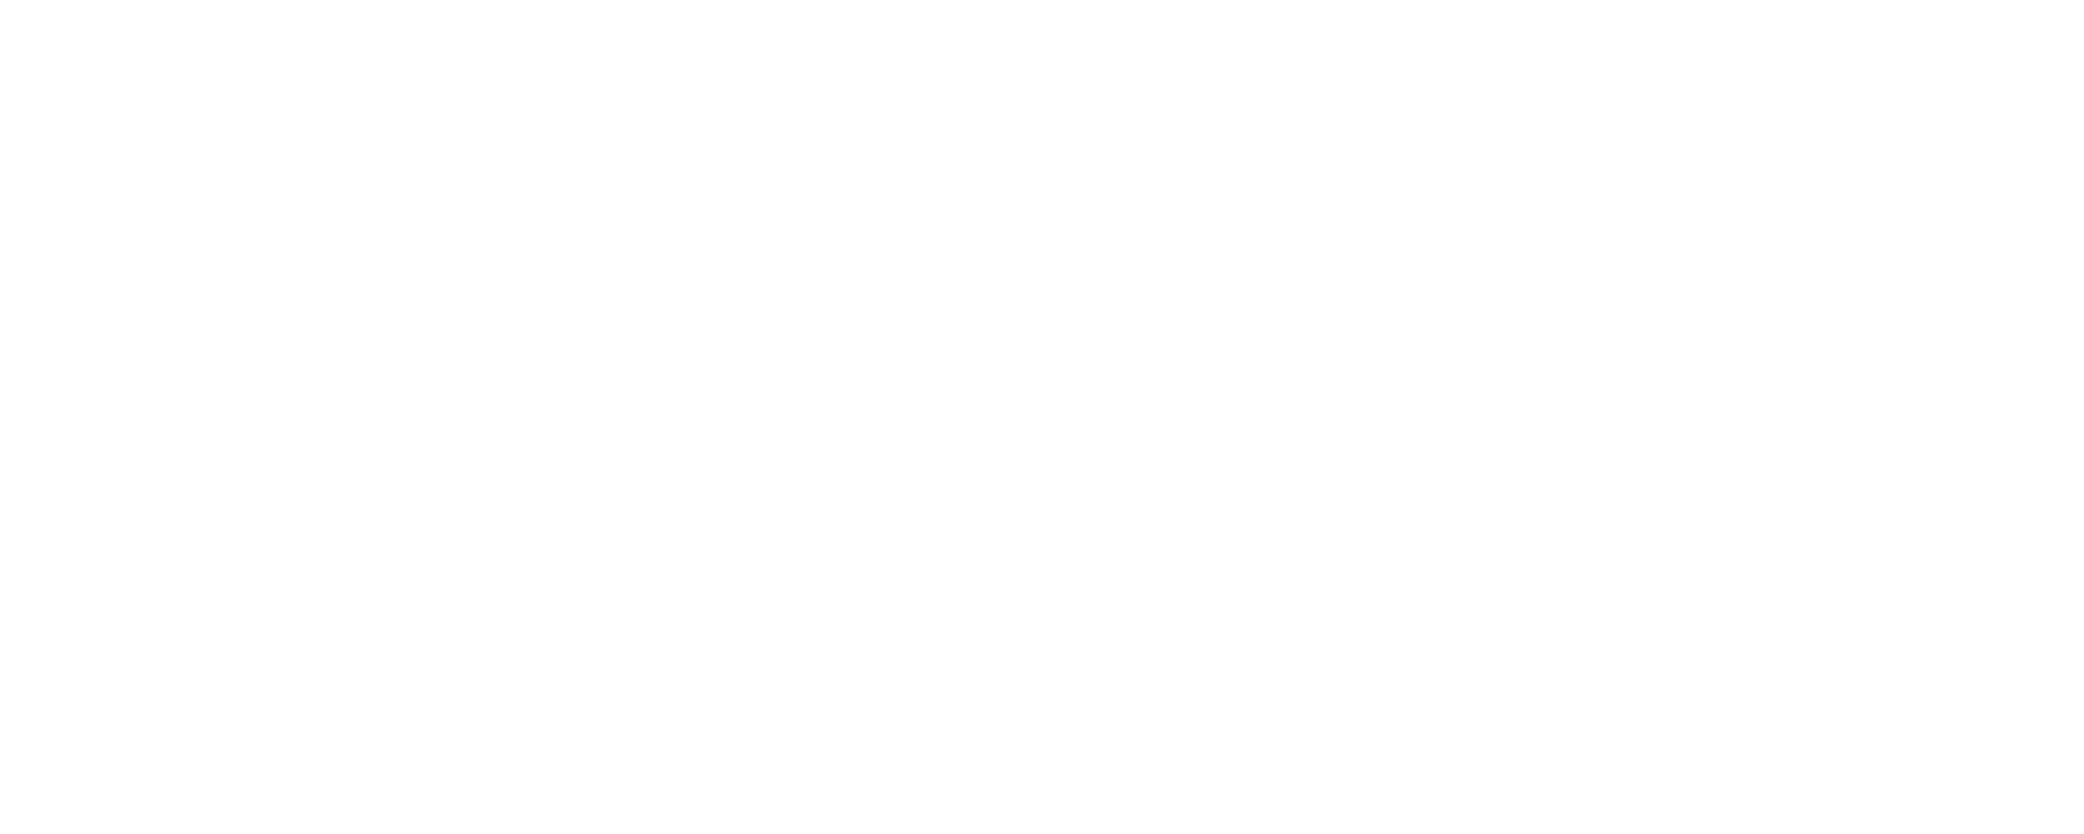 Genentech White 3 logo